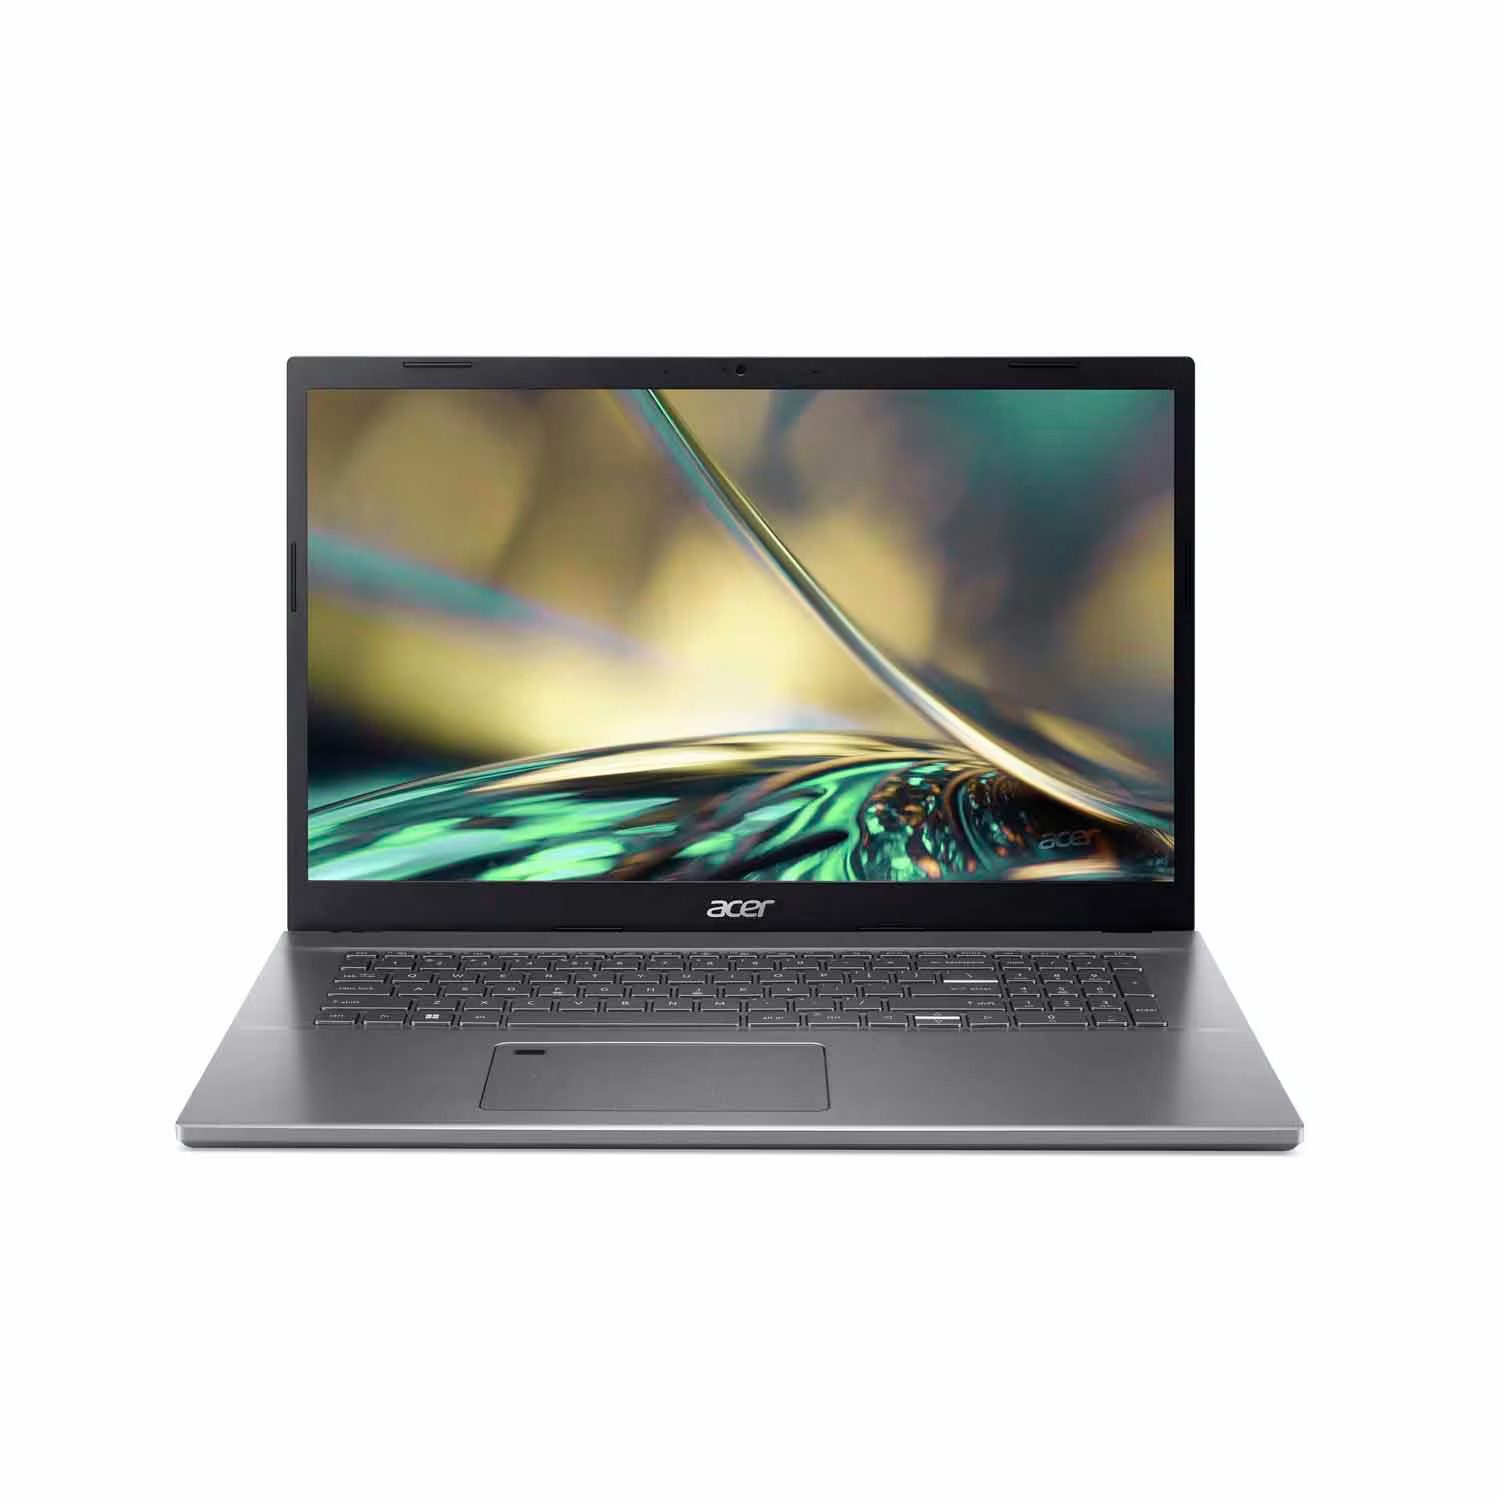 Acer Aspire 5, fertig eingerichtetes Business-Notebook (43,90 cm/17.3 Zoll, Intel Core i5 12450H, Intel UHD Graphics, 500 GB SSD, #mit Funkmaus +Notebooktasche)